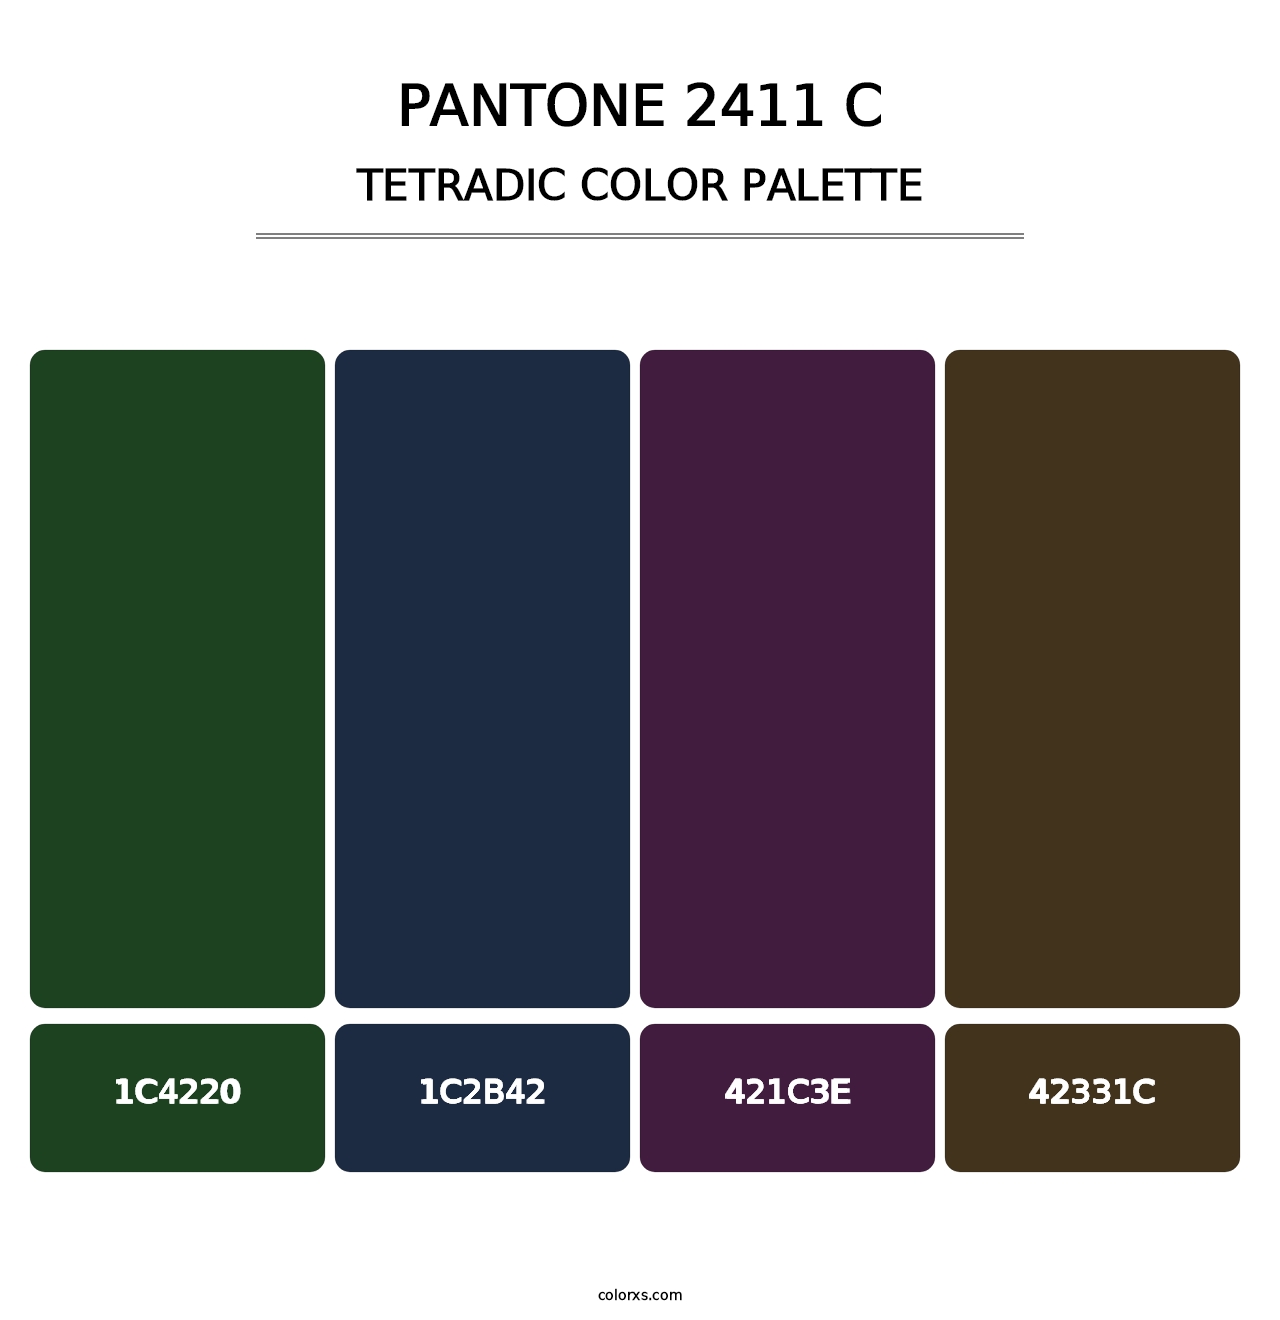 PANTONE 2411 C - Tetradic Color Palette